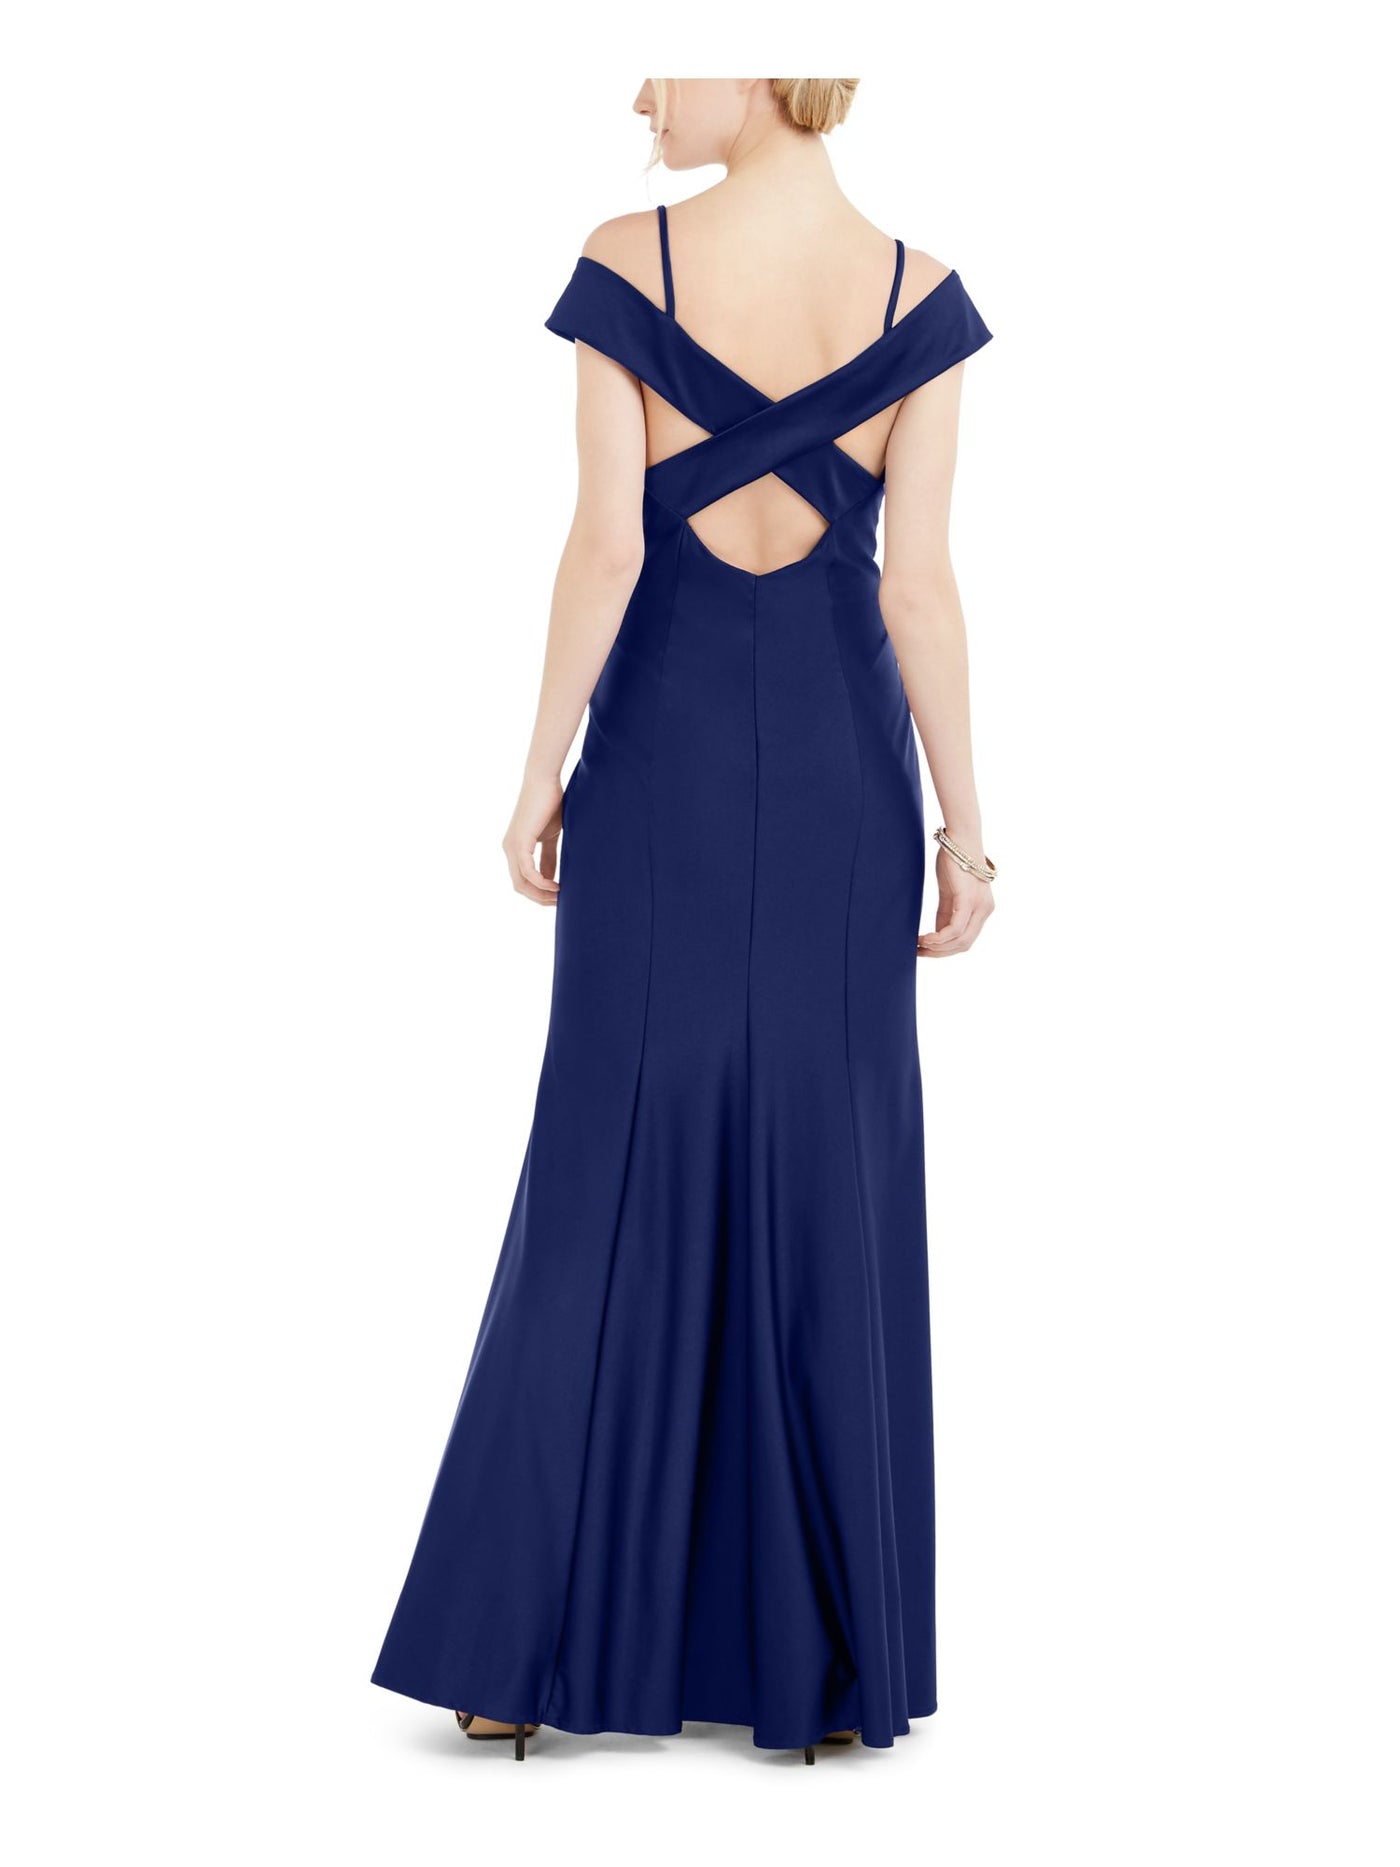 NIGHTWAY Womens Blue Cold Shoulder Crisscross Back Full-Length Evening Dress 10